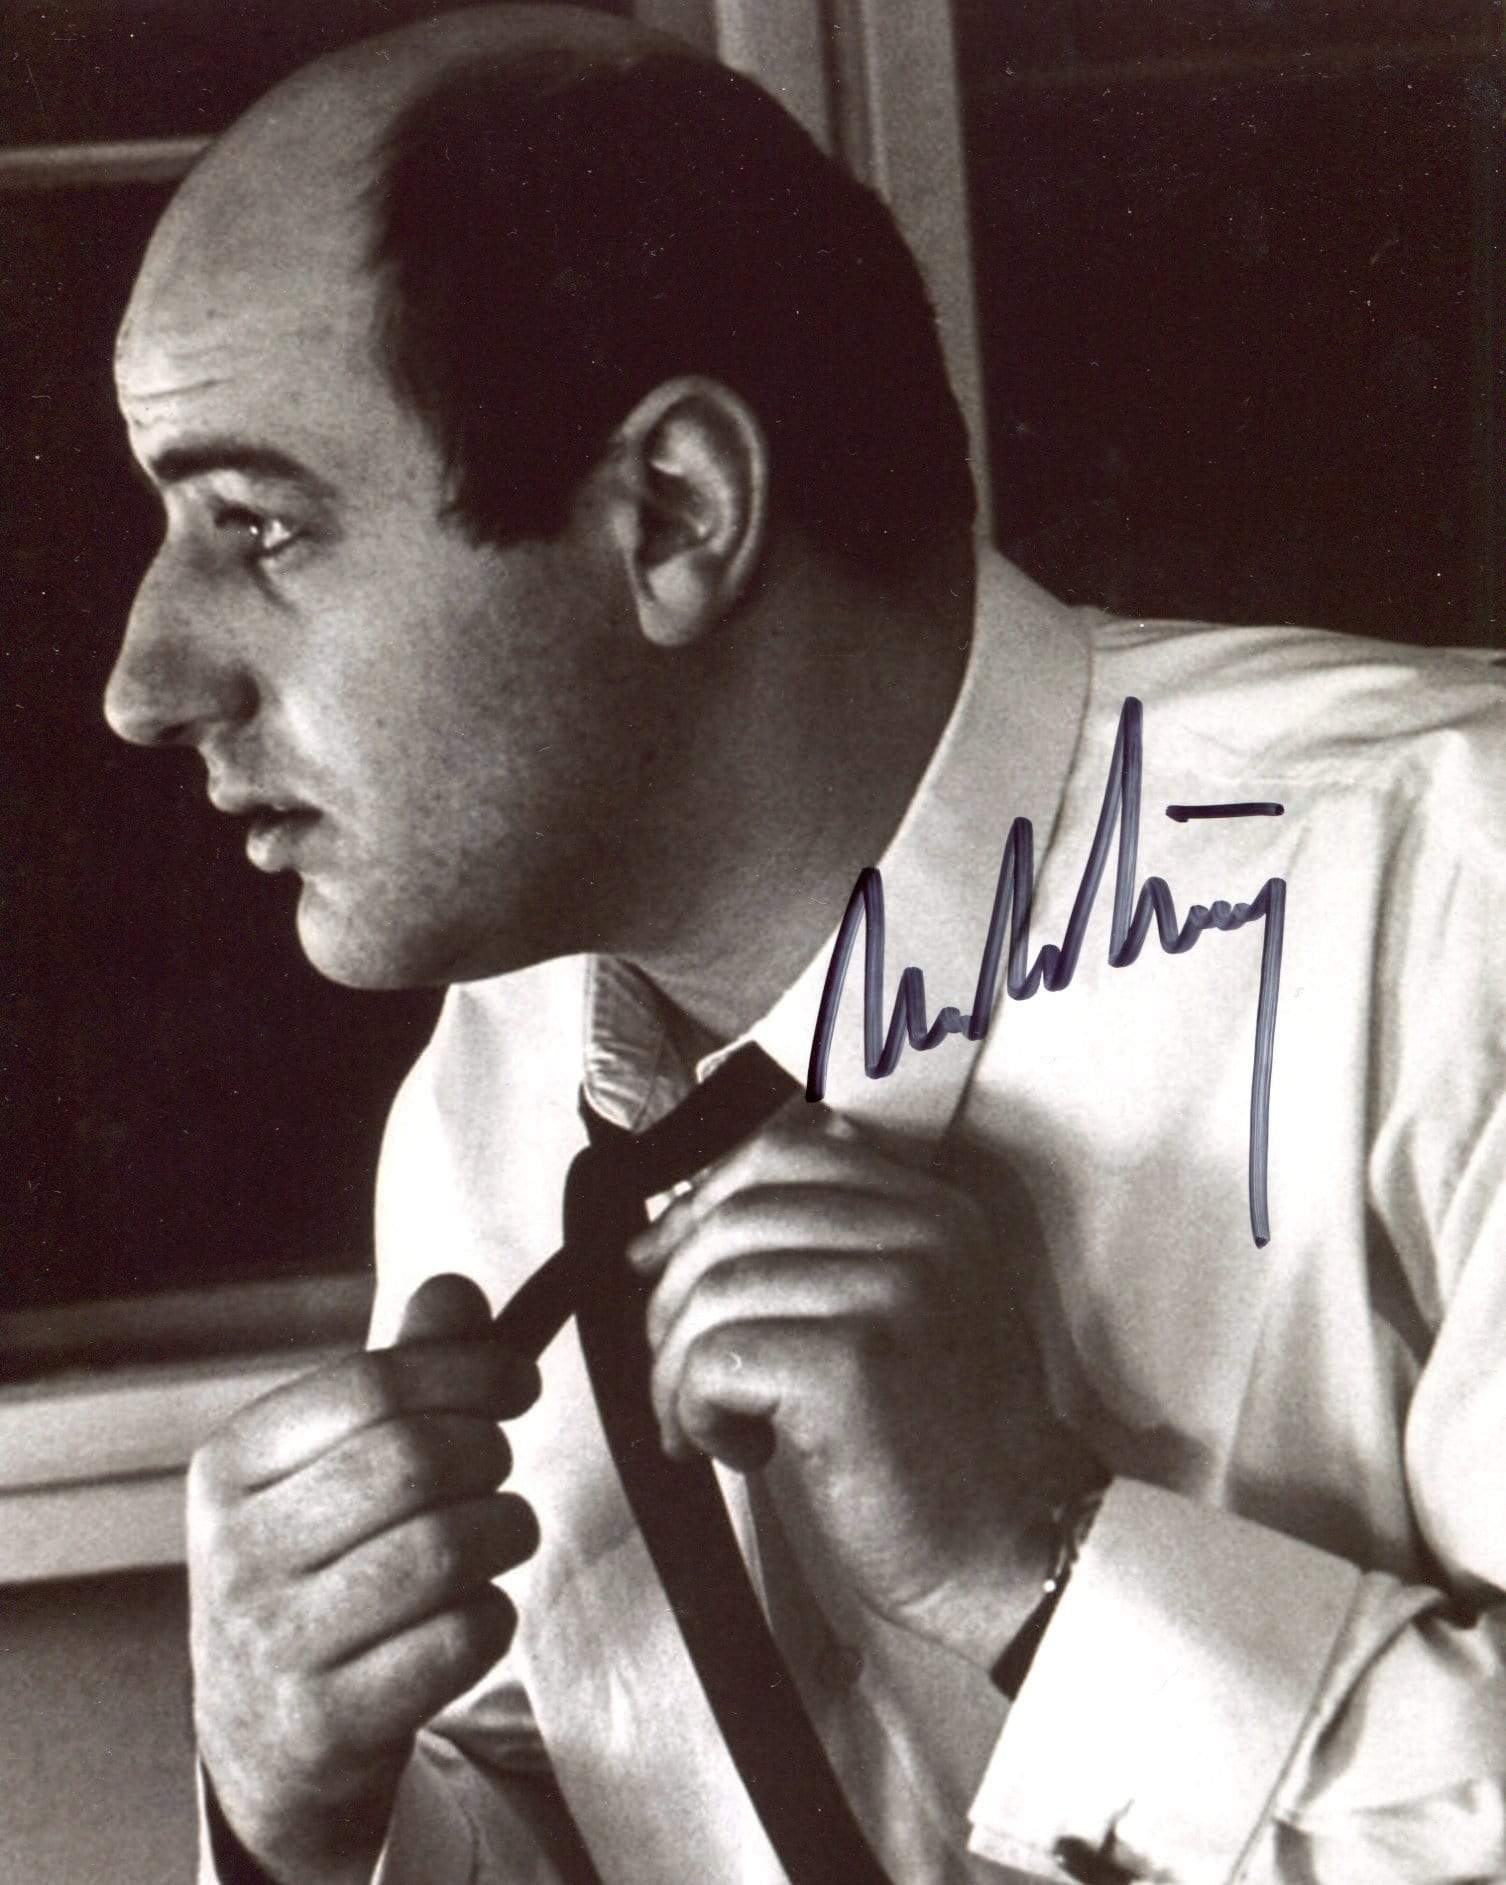 Krug, Manfred autograph